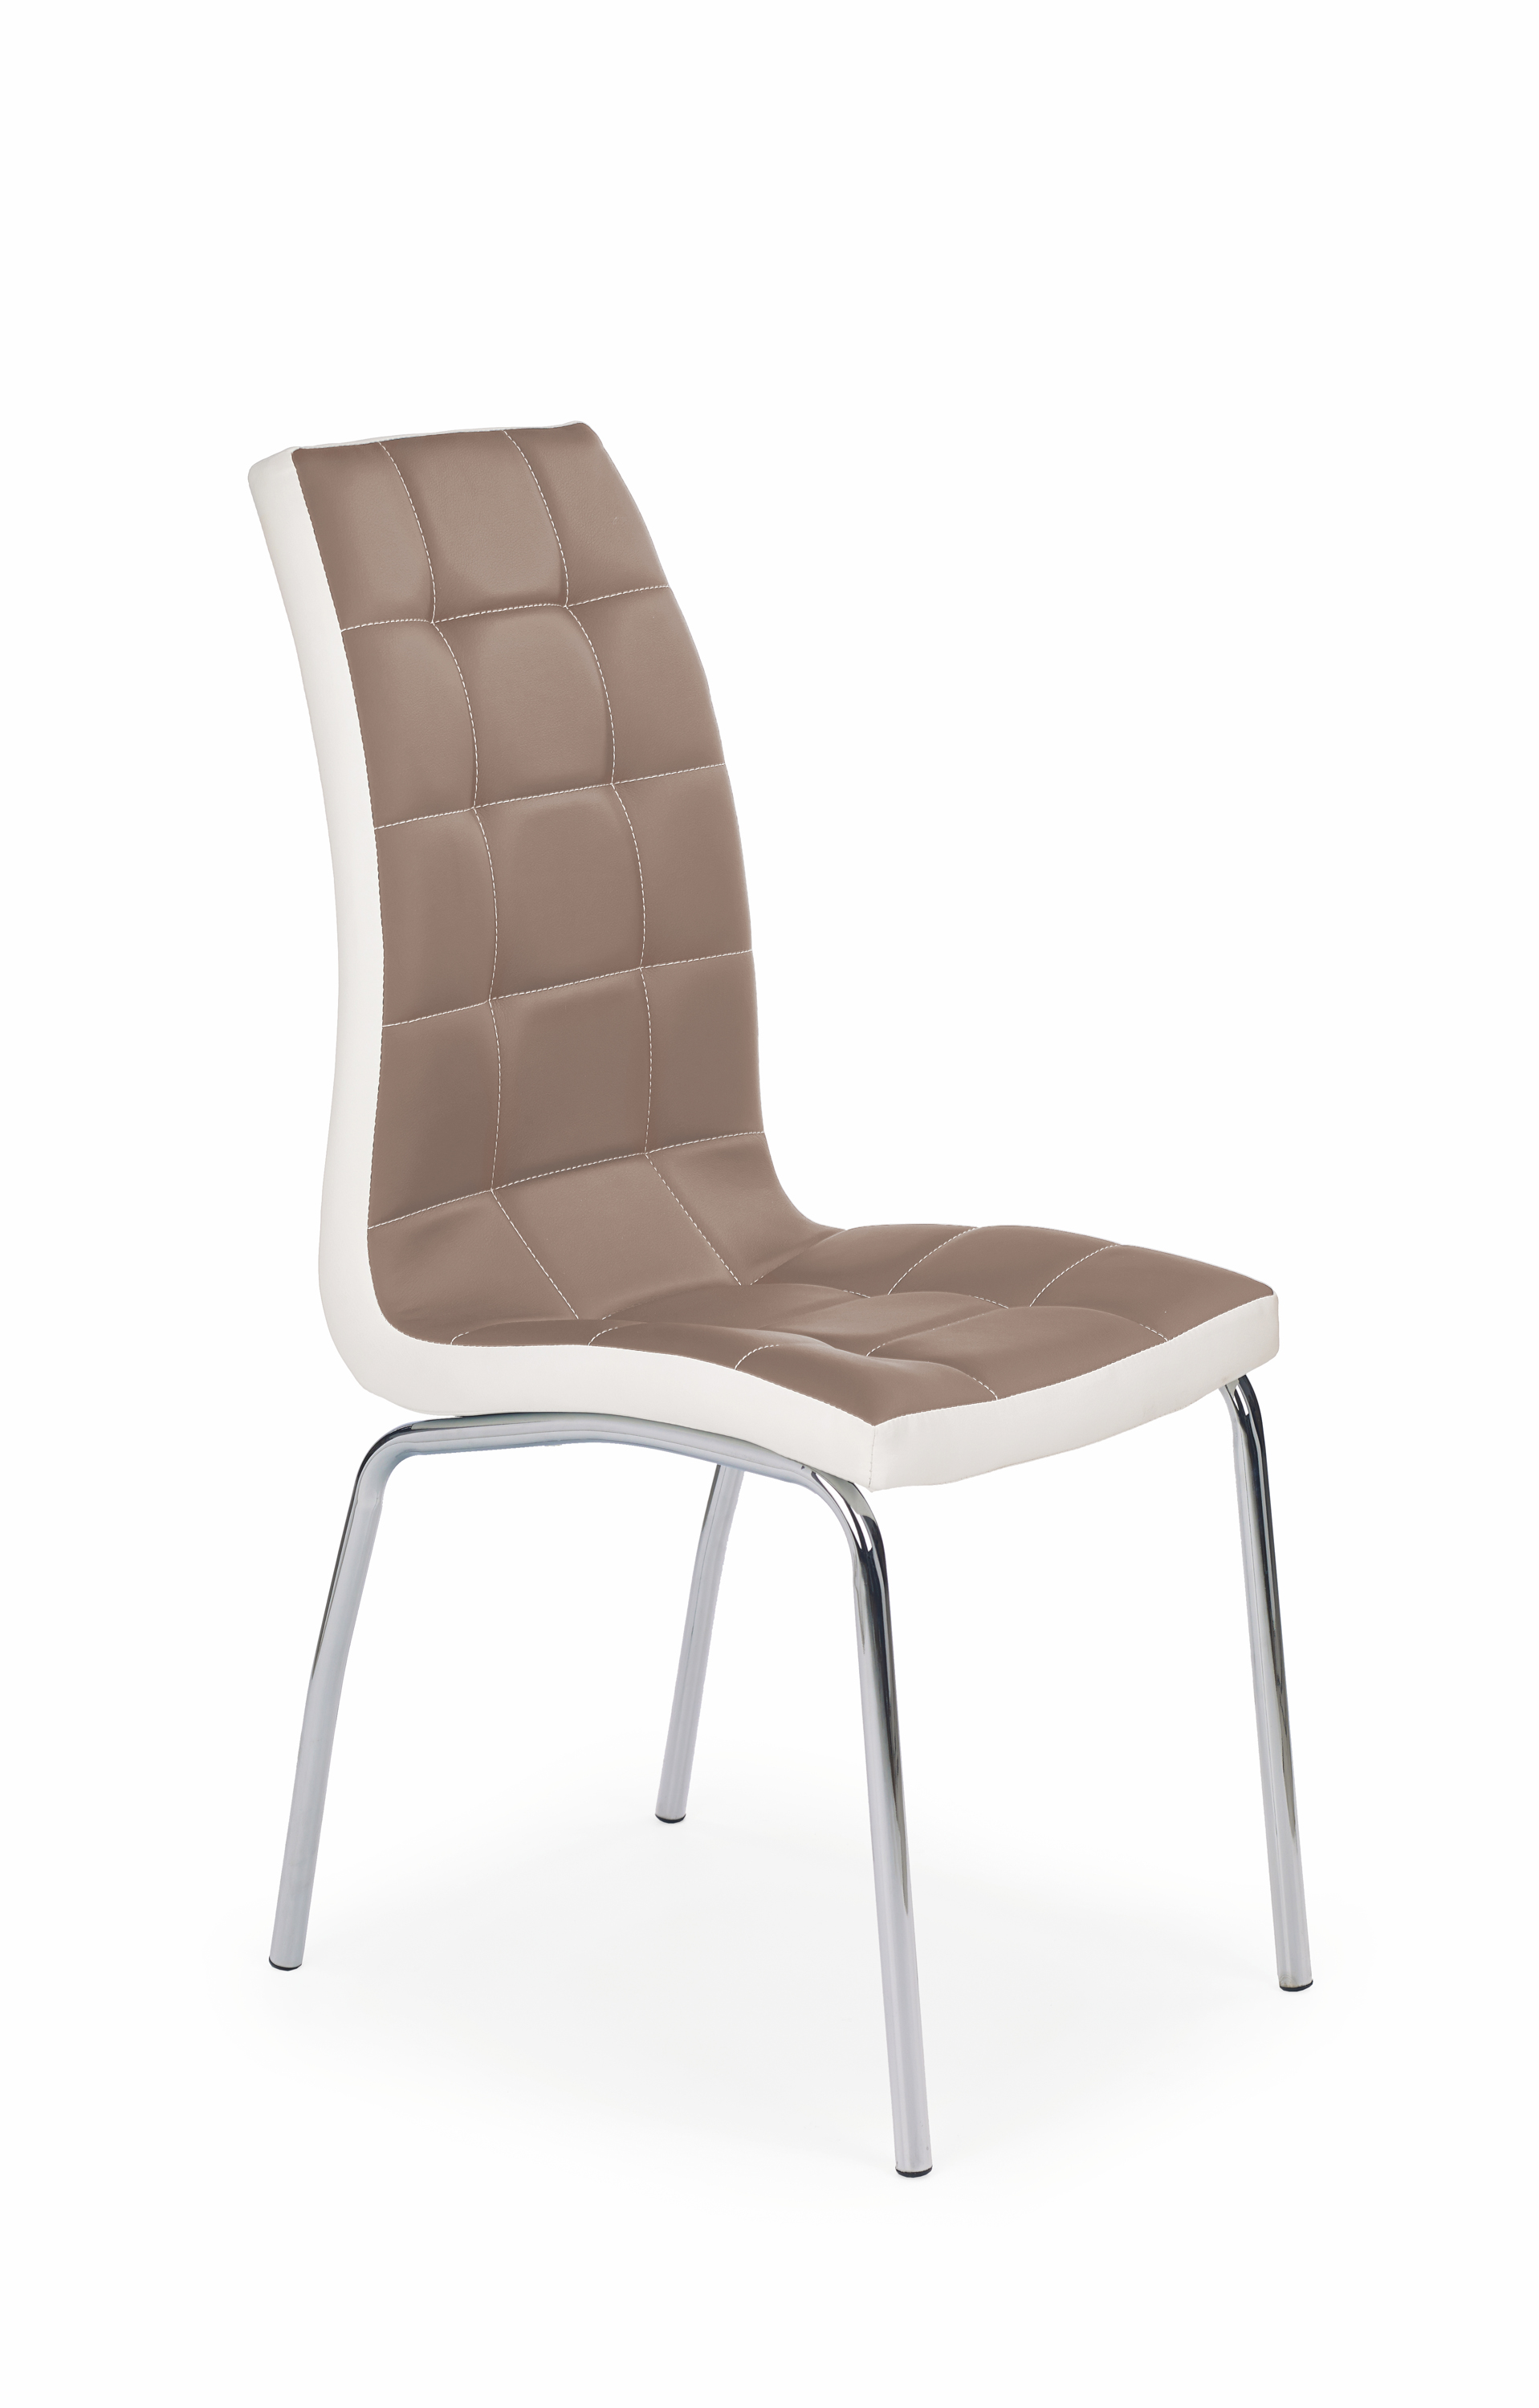 K186 szék - cappuccino / fehér k186 Židle cappuccino - bílý